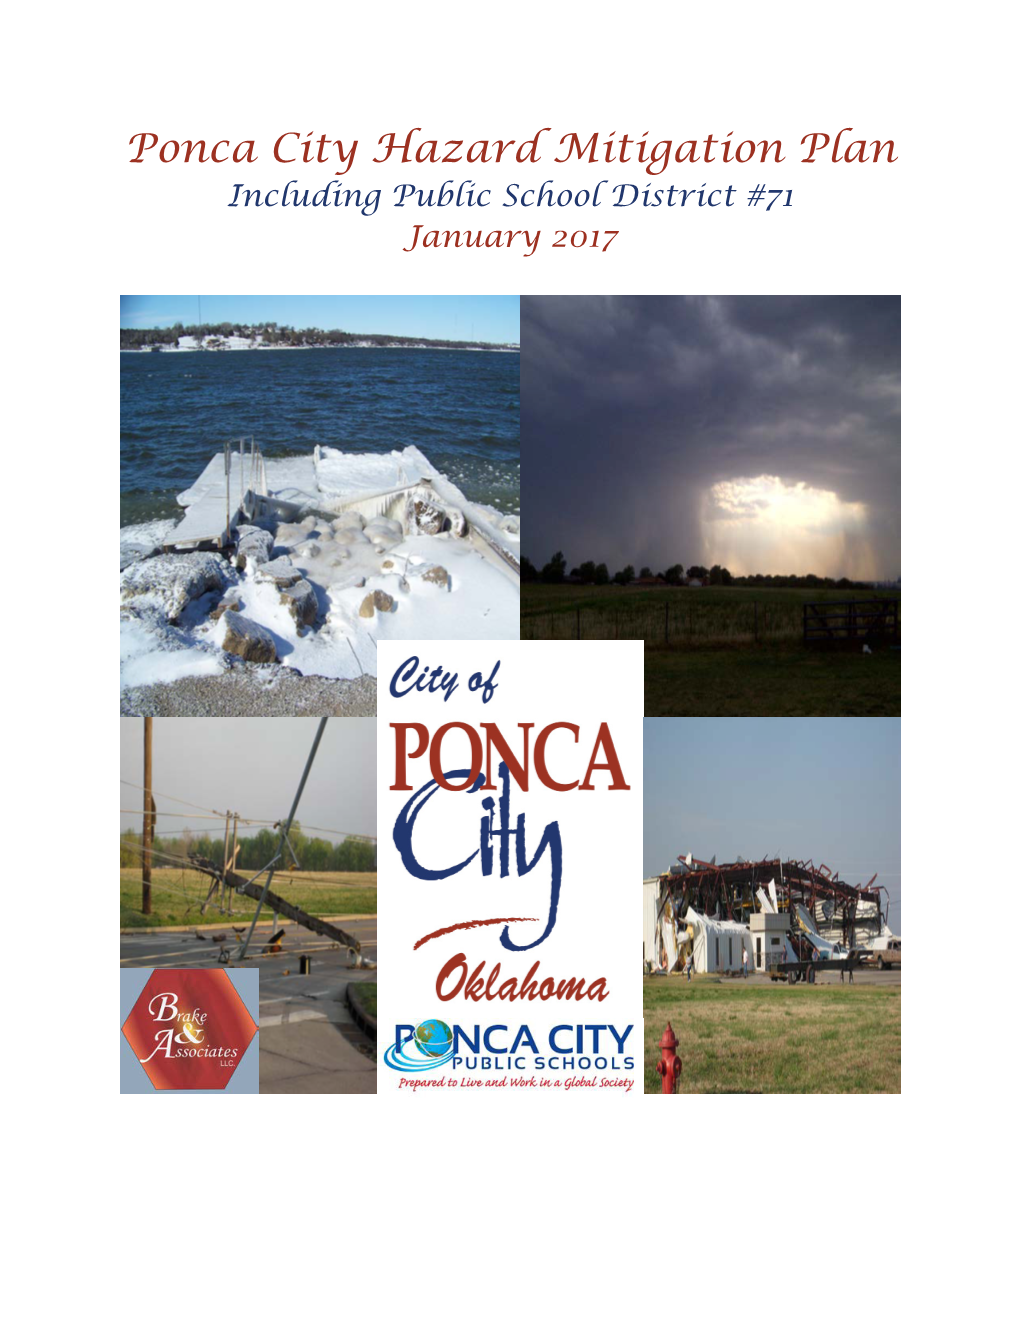 Ponca City Hazard Mitigation Plan Including Public School District #71 January 2017